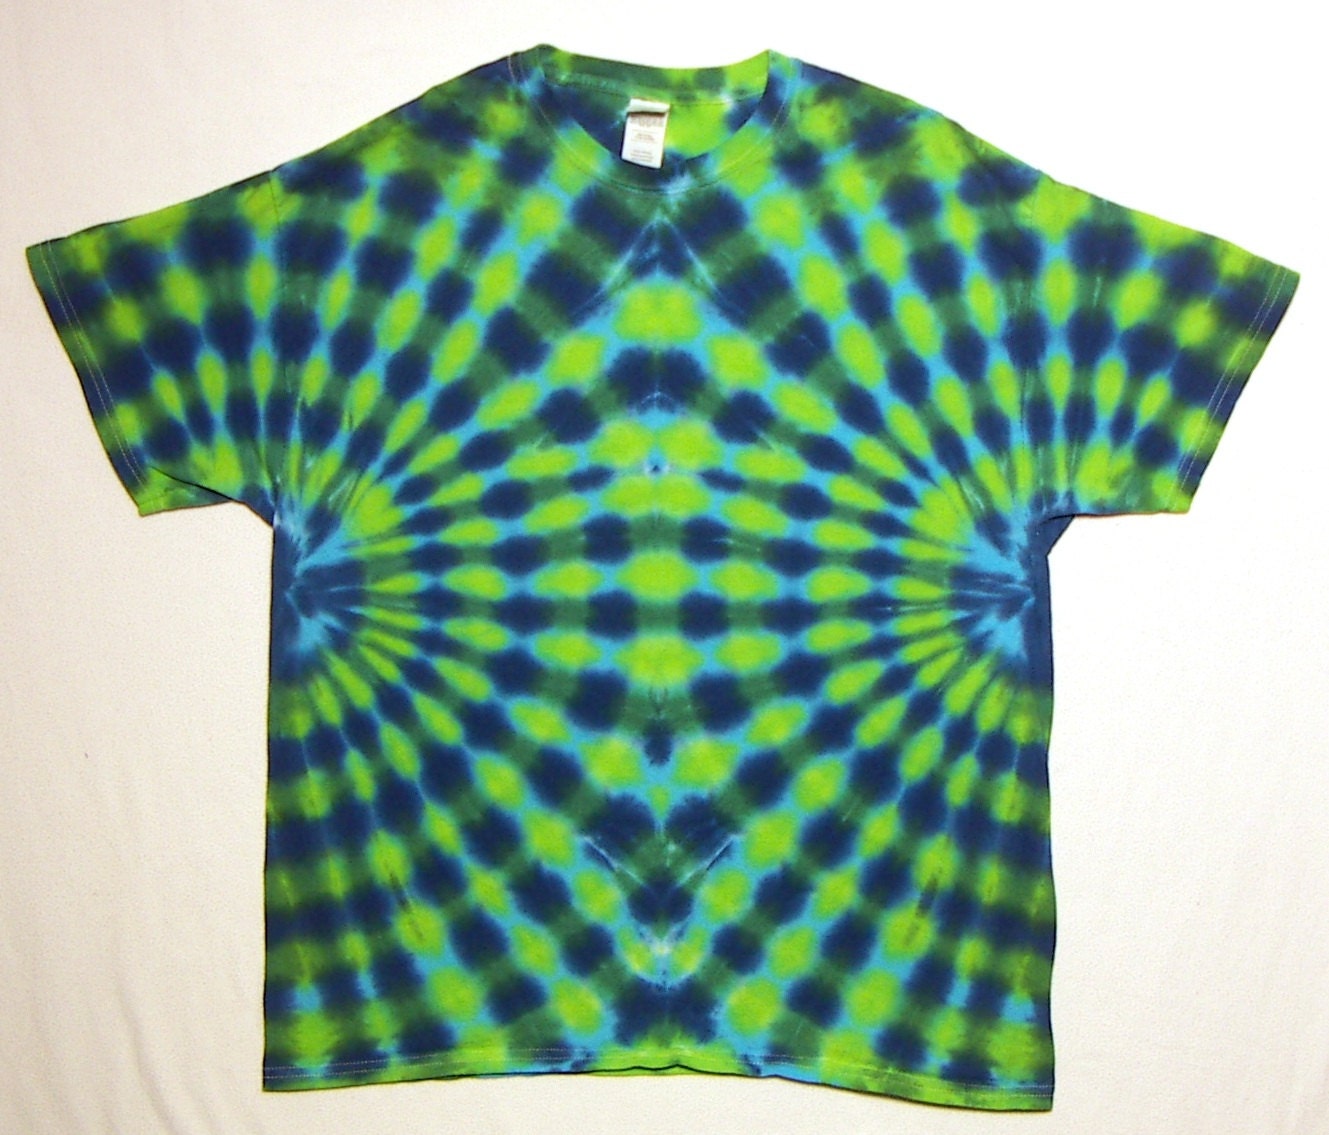 Green Tie Dye tshirt Adult XL by tiedyedmonkeys on Etsy